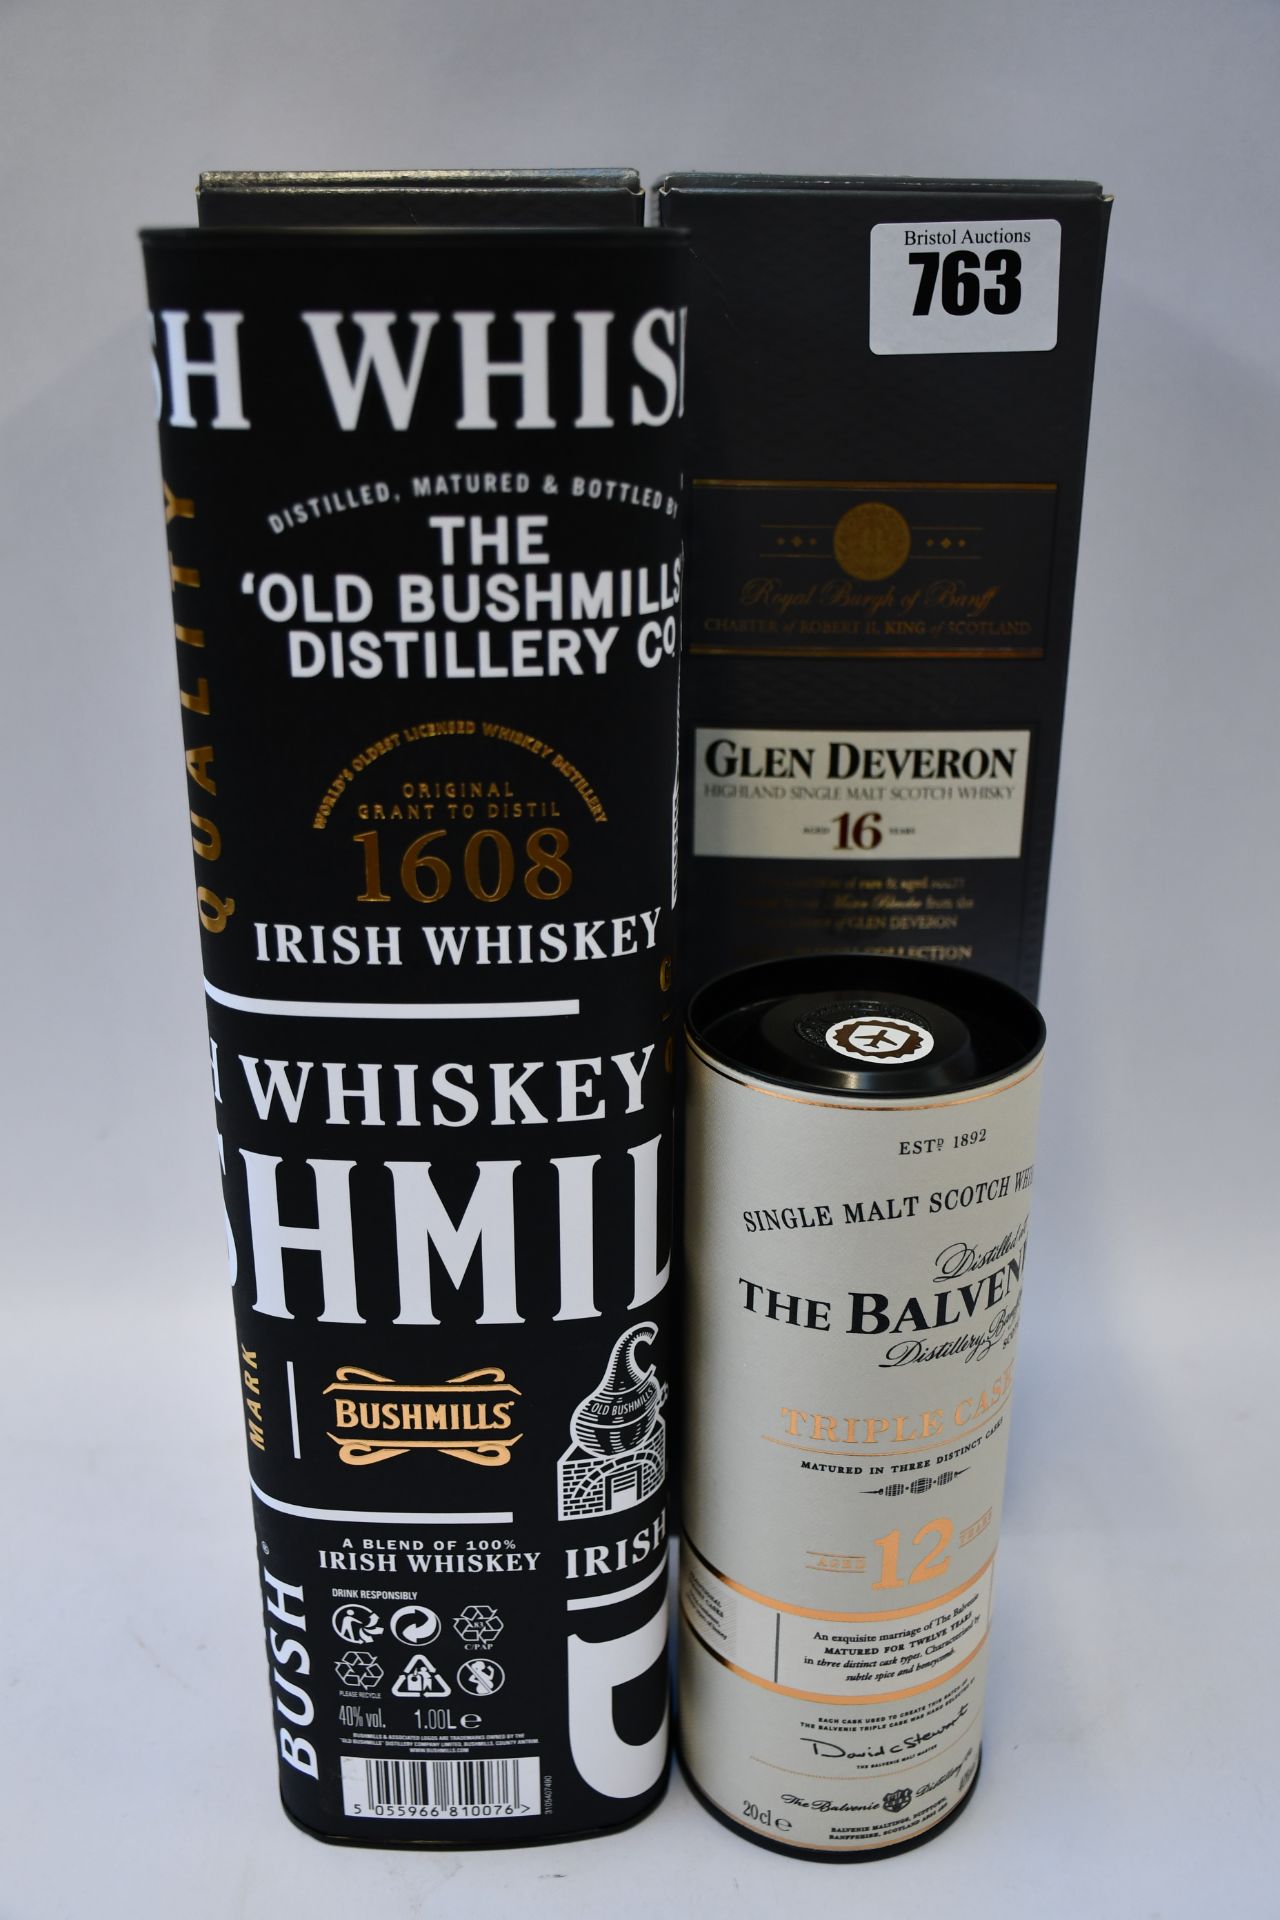 Two Glen Deveron single malt whisky (2 x 1ltr), Bushmills Black Bush Irish whiskey (1ltr) and The